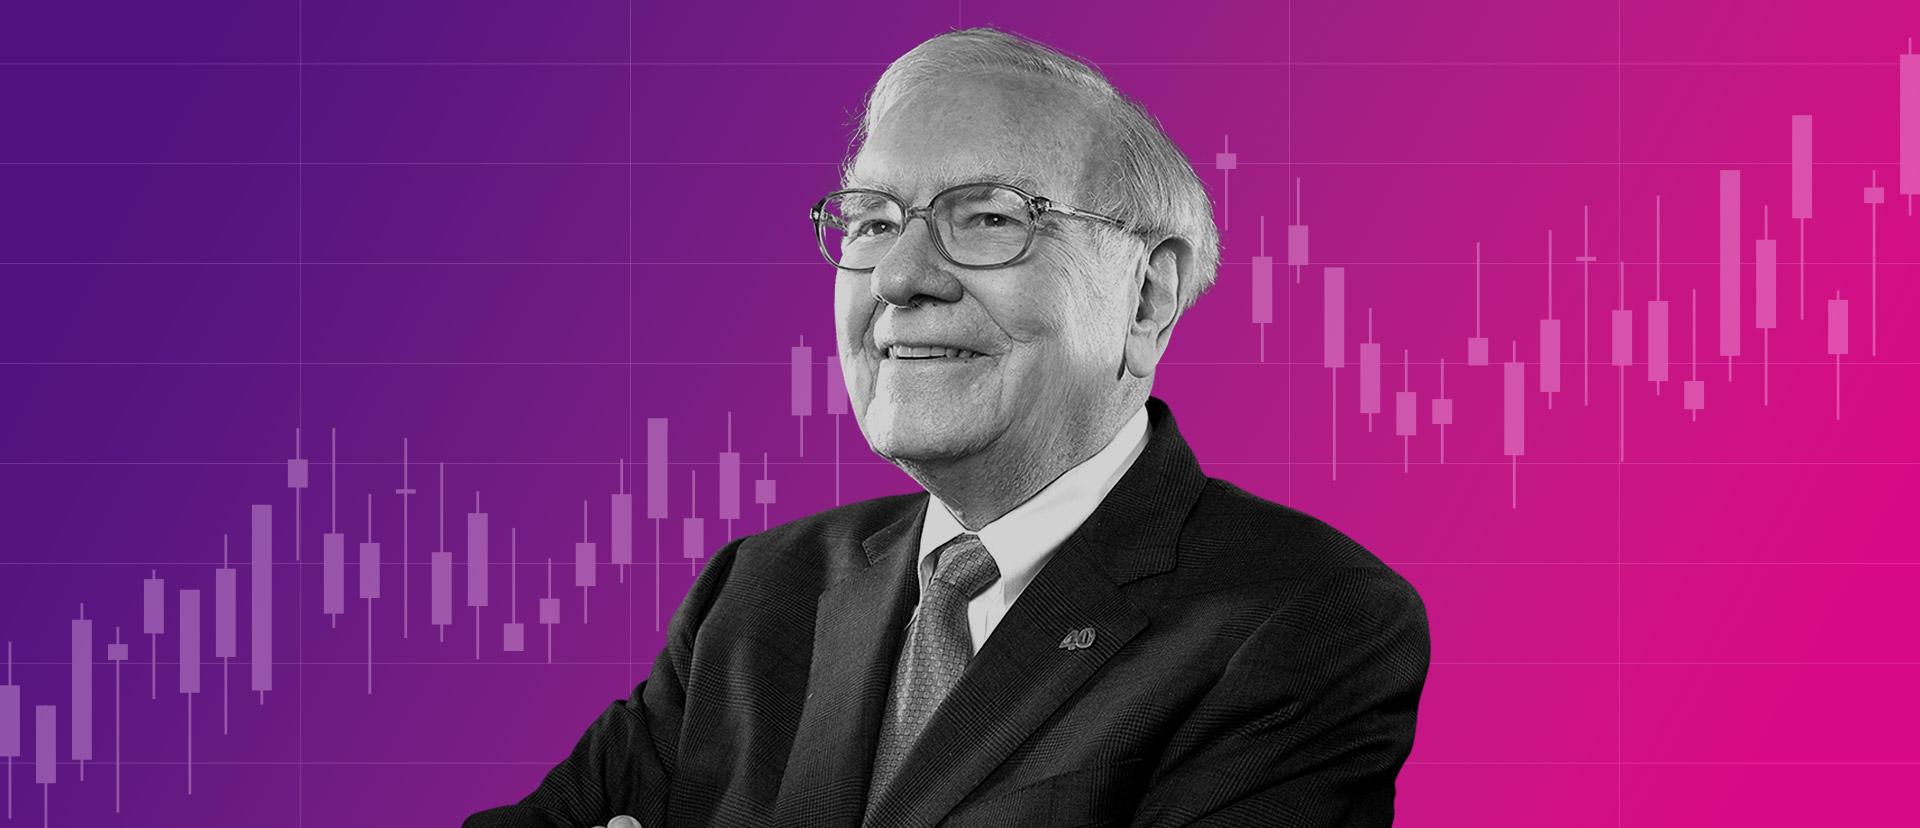 Warren Buffett's Investments in the Last Quarter